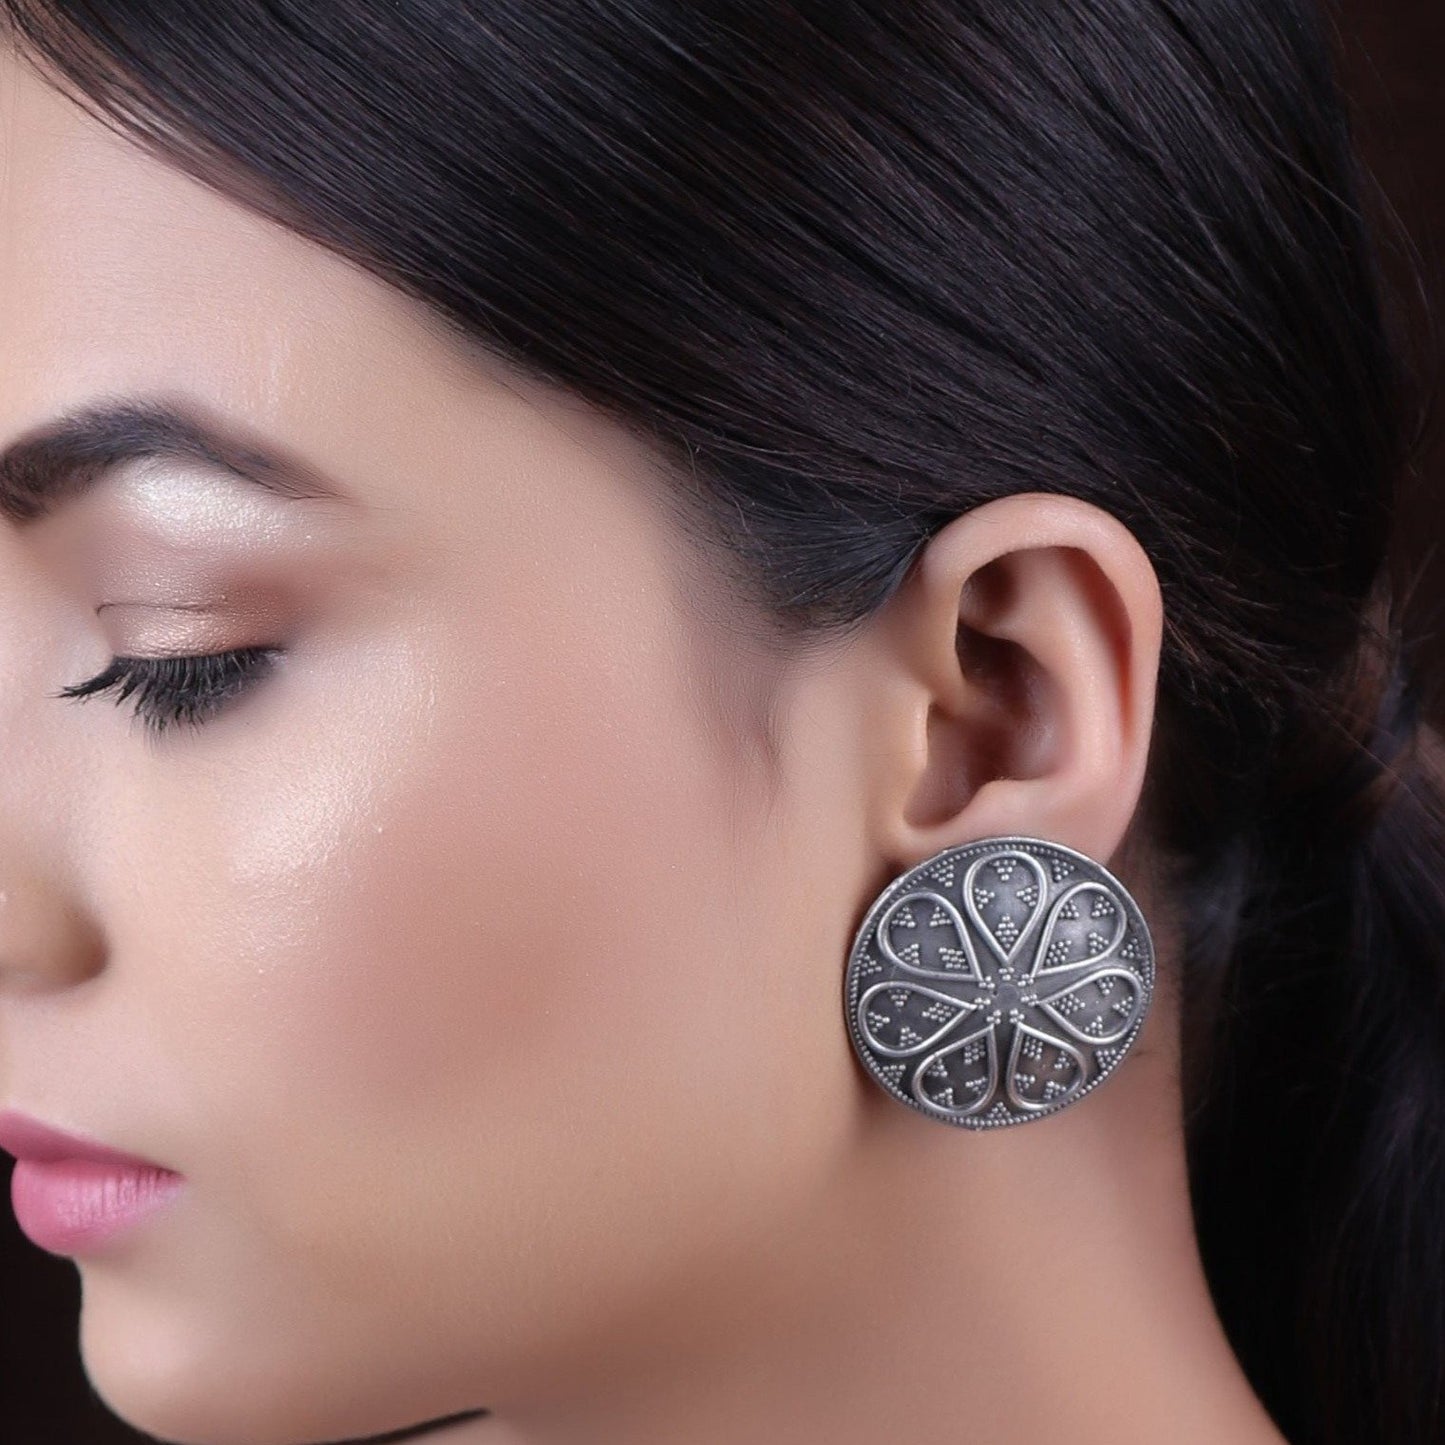 Earrings,The Soft Petal Silver Look Alike Stud - Cippele Multi Store